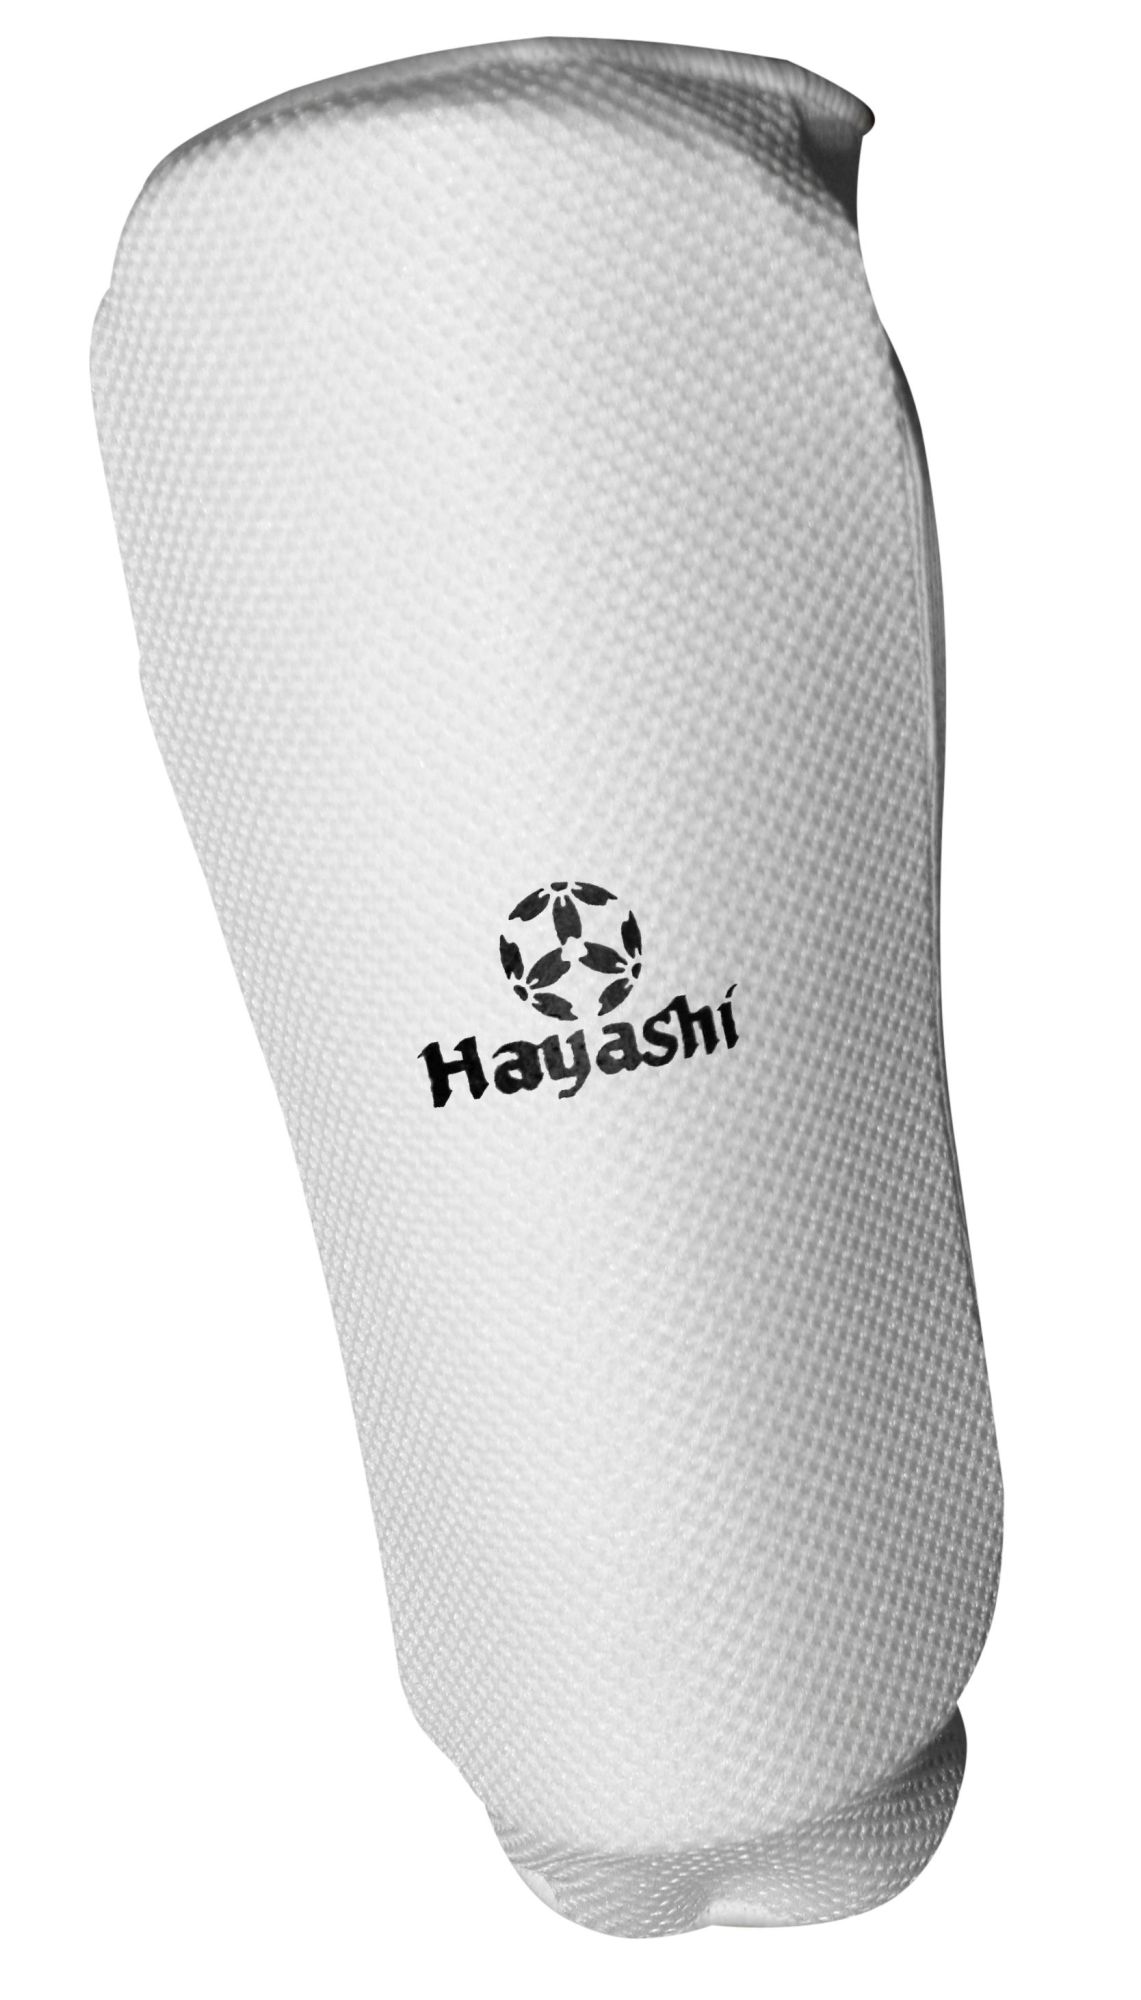 Hayashi Onderarm beschermer Wit